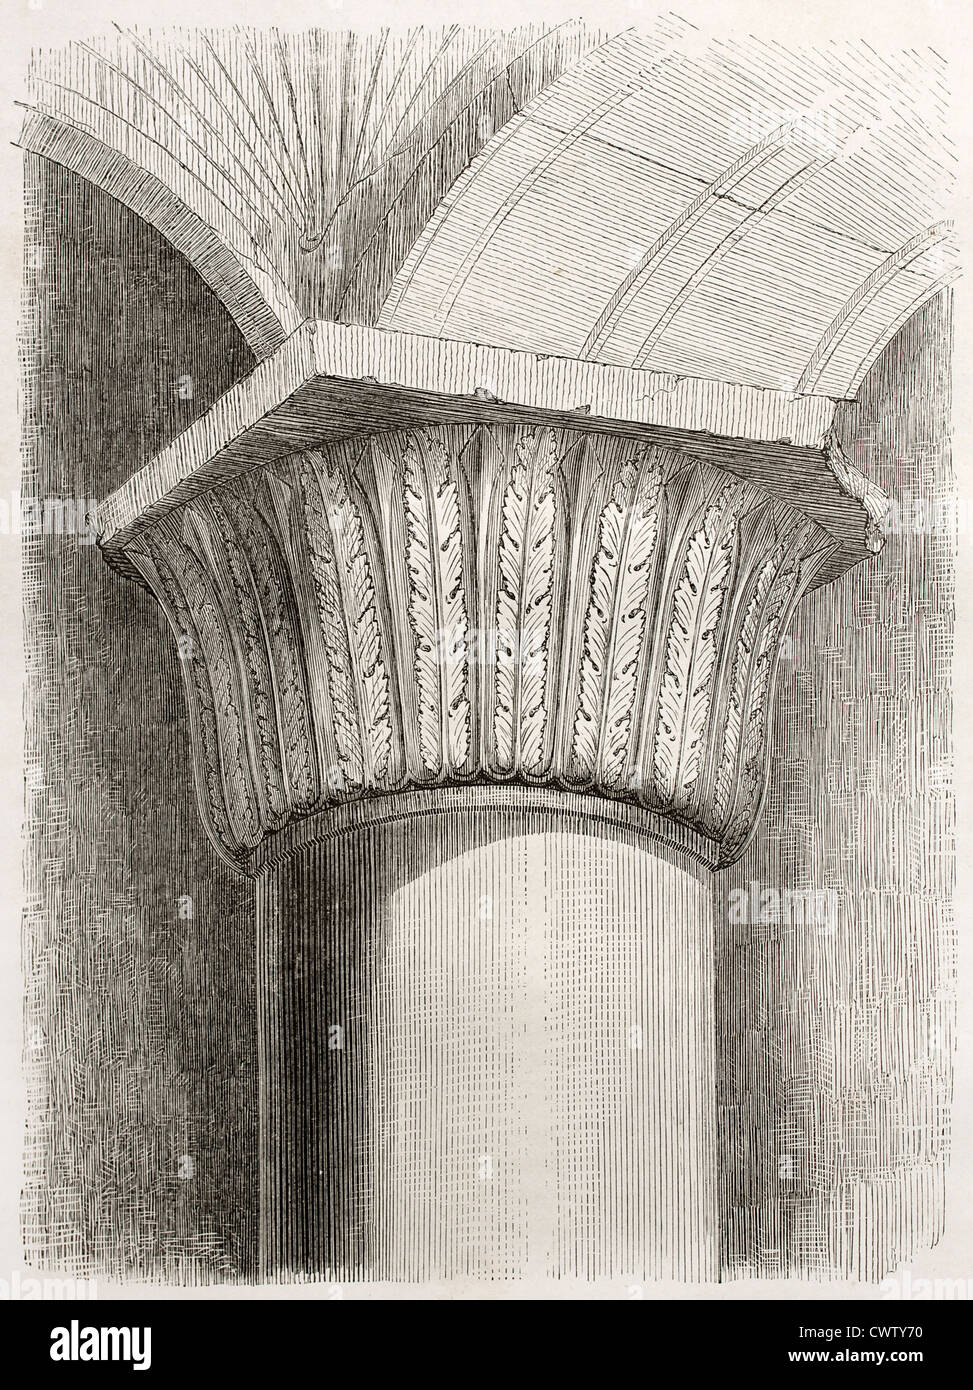 Salomon templo subterráneo pilar de stock - Alamy